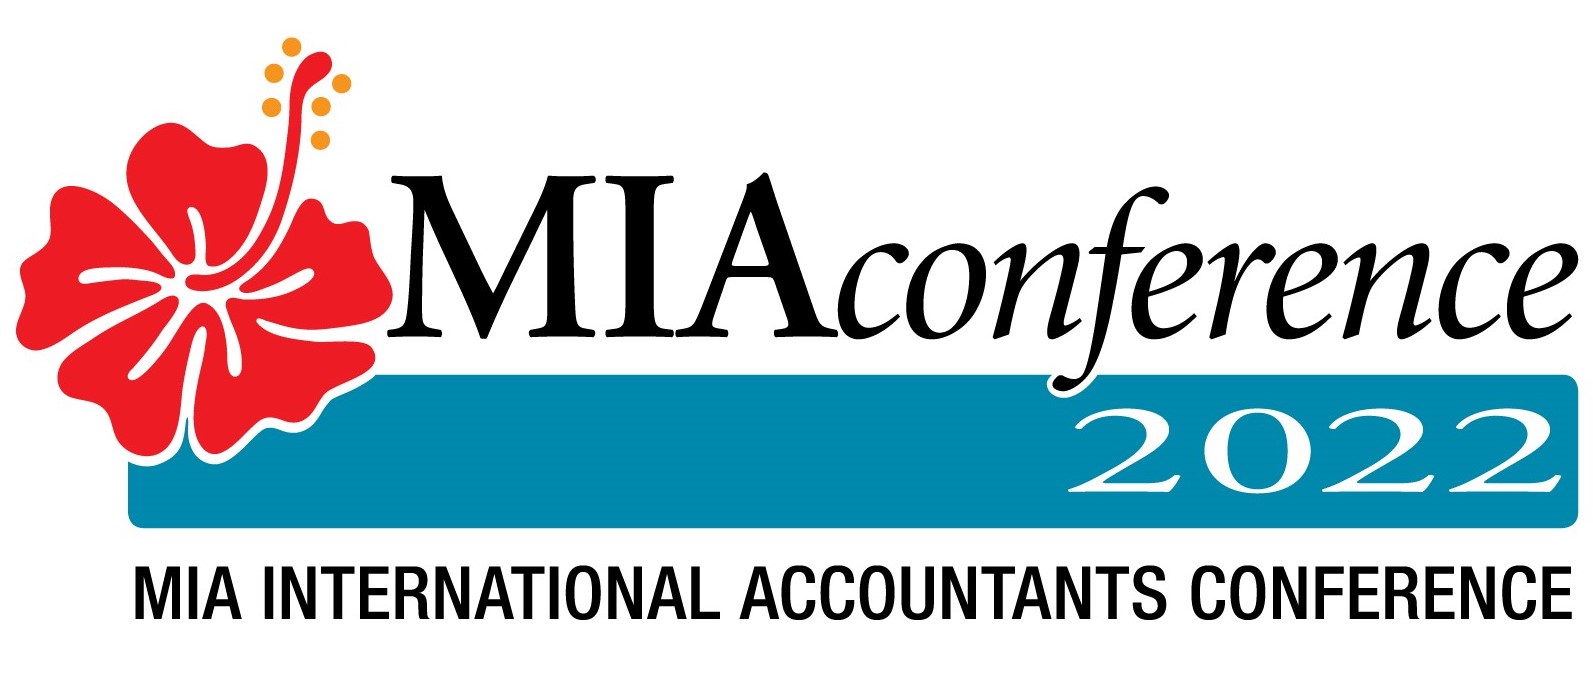 MIA International Accountants Conference 2022 CAPA